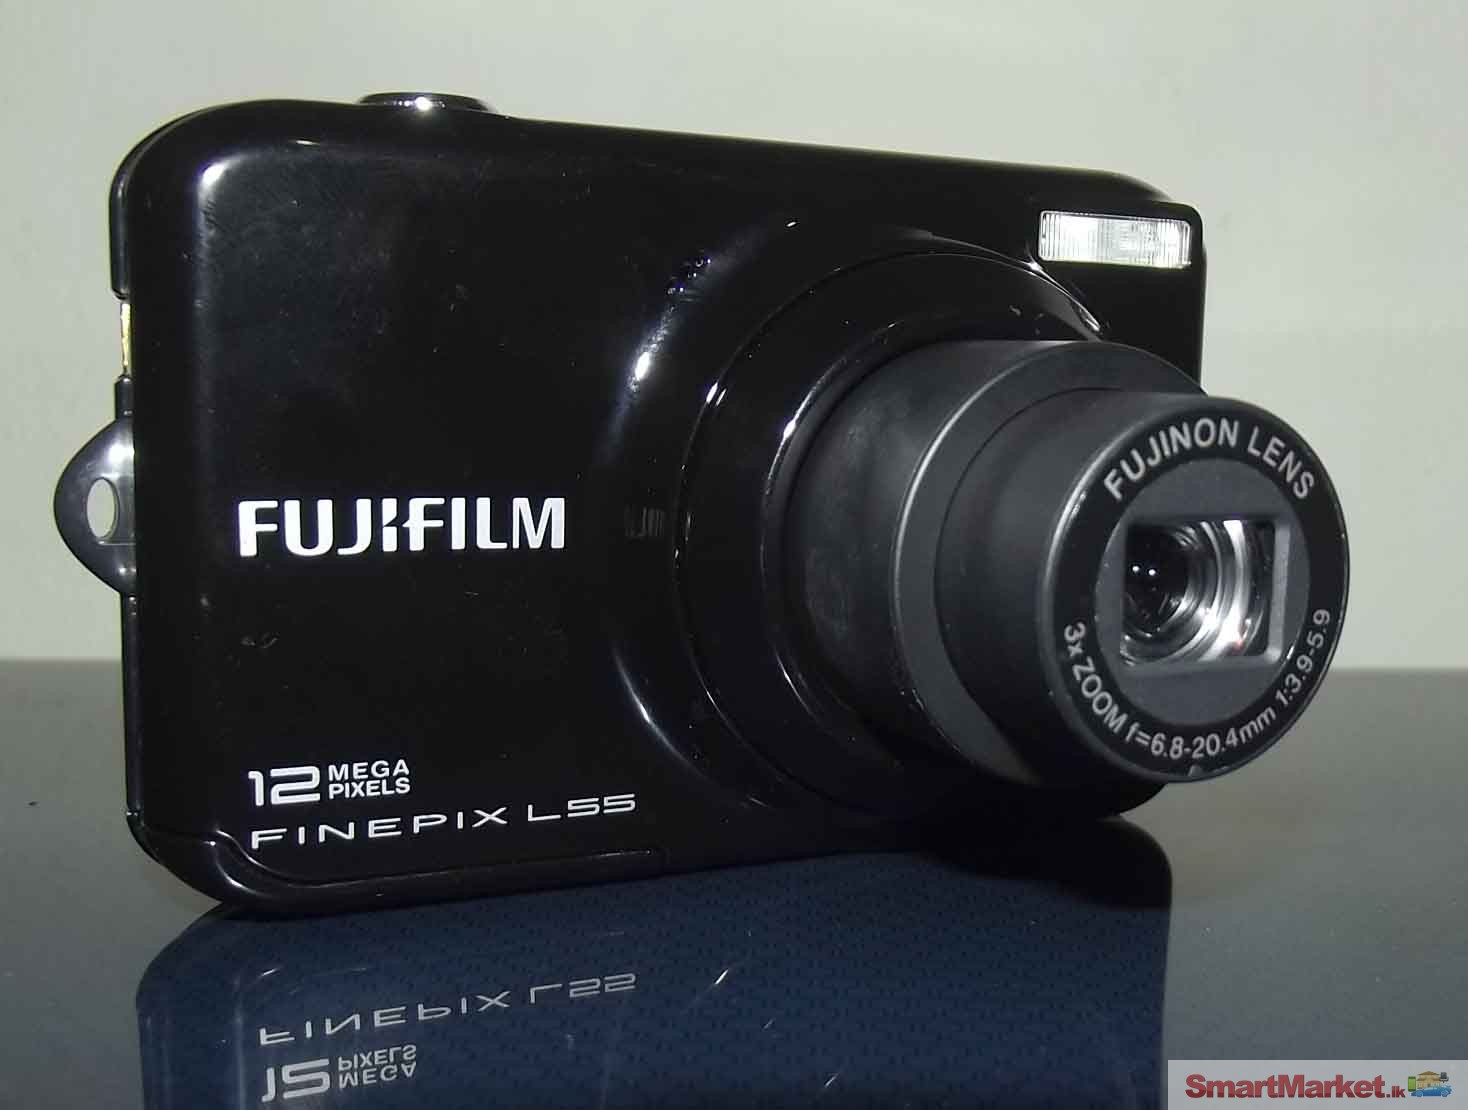 Fujifilm Finepix L55 Camera For Sale in | Smartmarket.lk